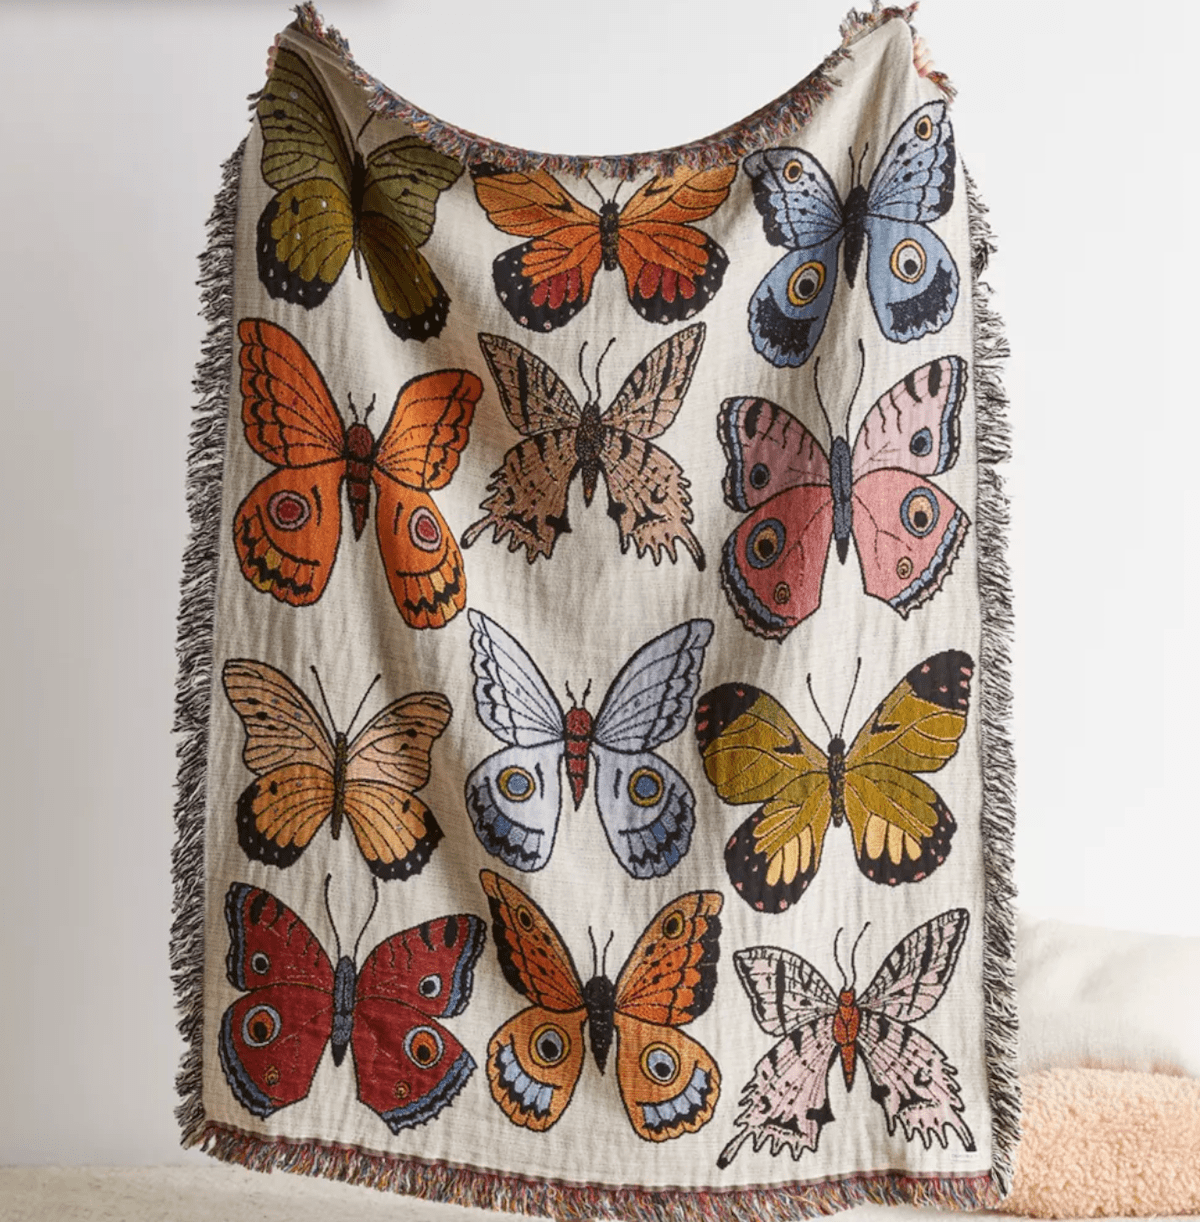 Butterflies PORCELAIN ORNAMENT Great Christmas Gift Idea 